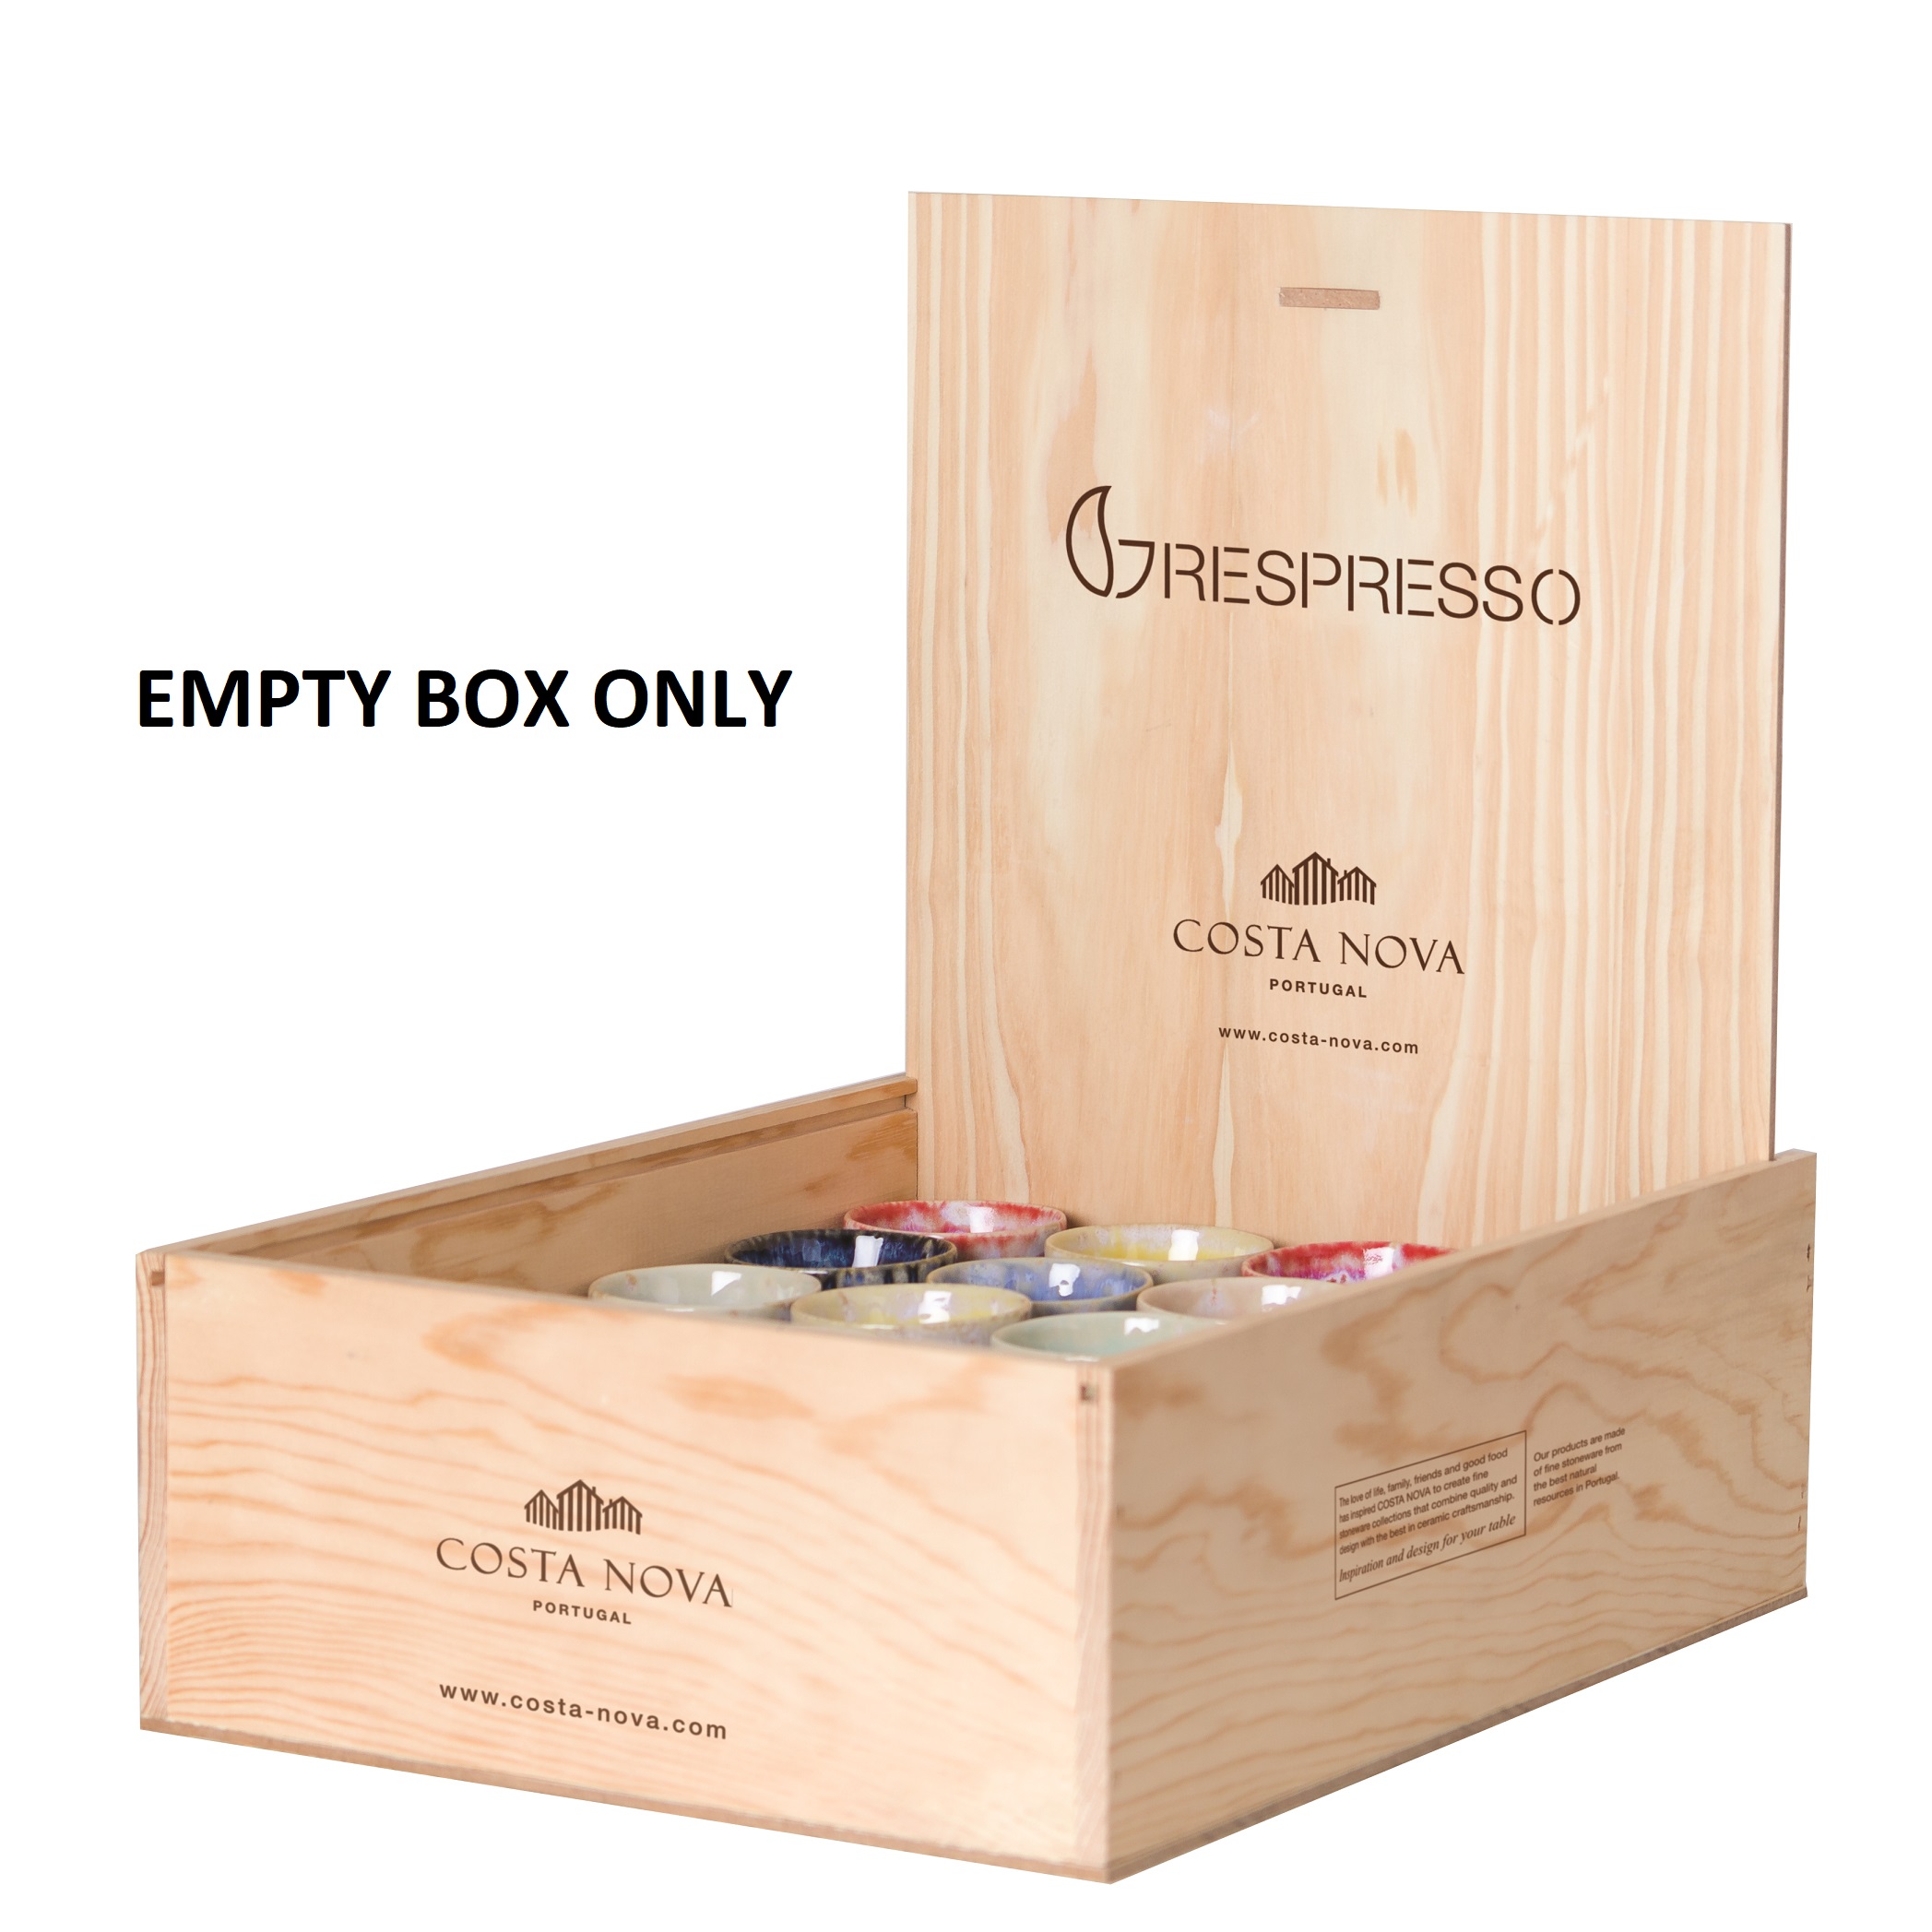 Grespresso Espresso X40 Display Box - Empty Gift